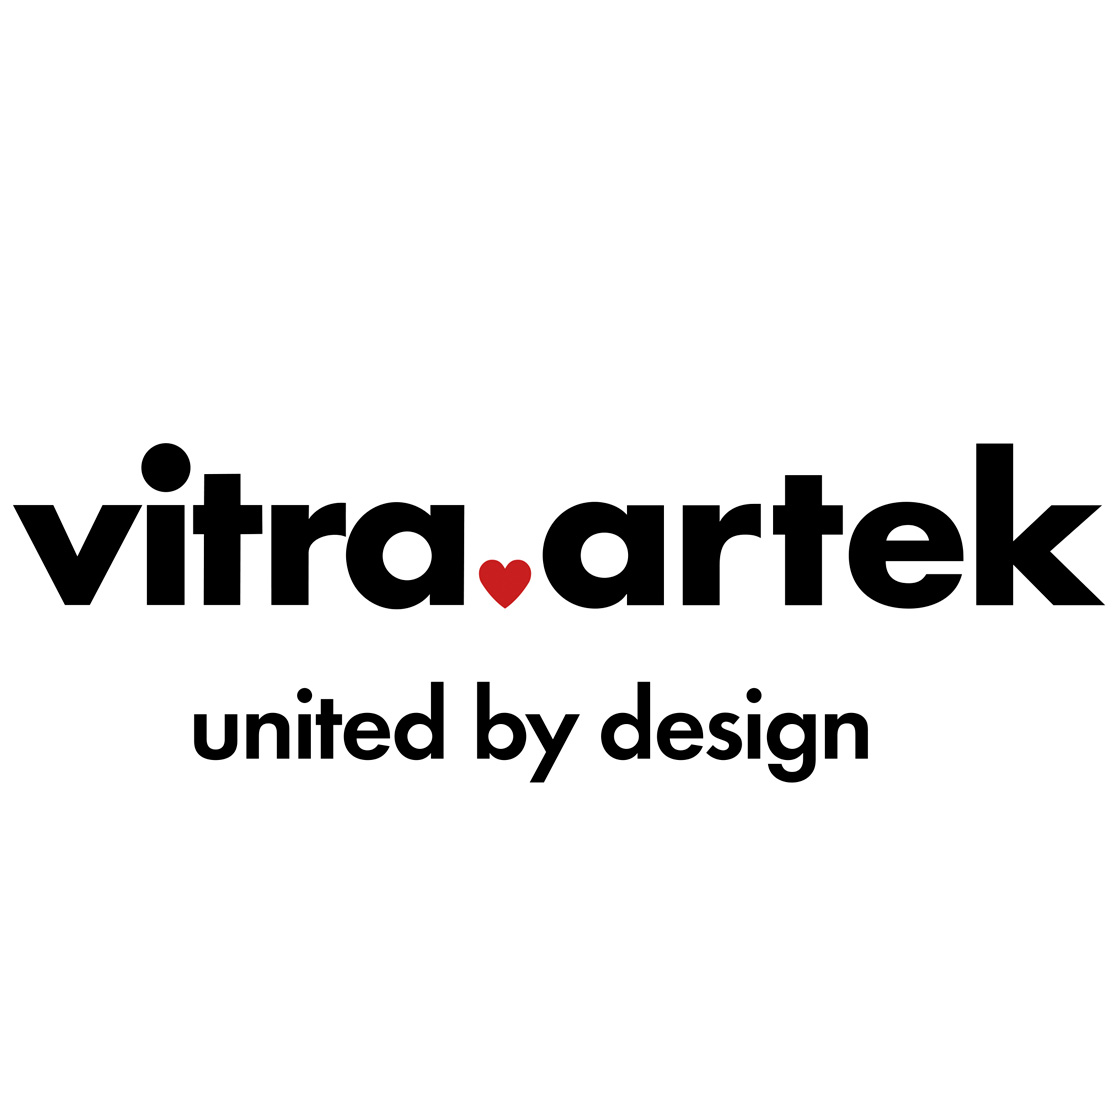 Vitra acquired the Finnish company Artek